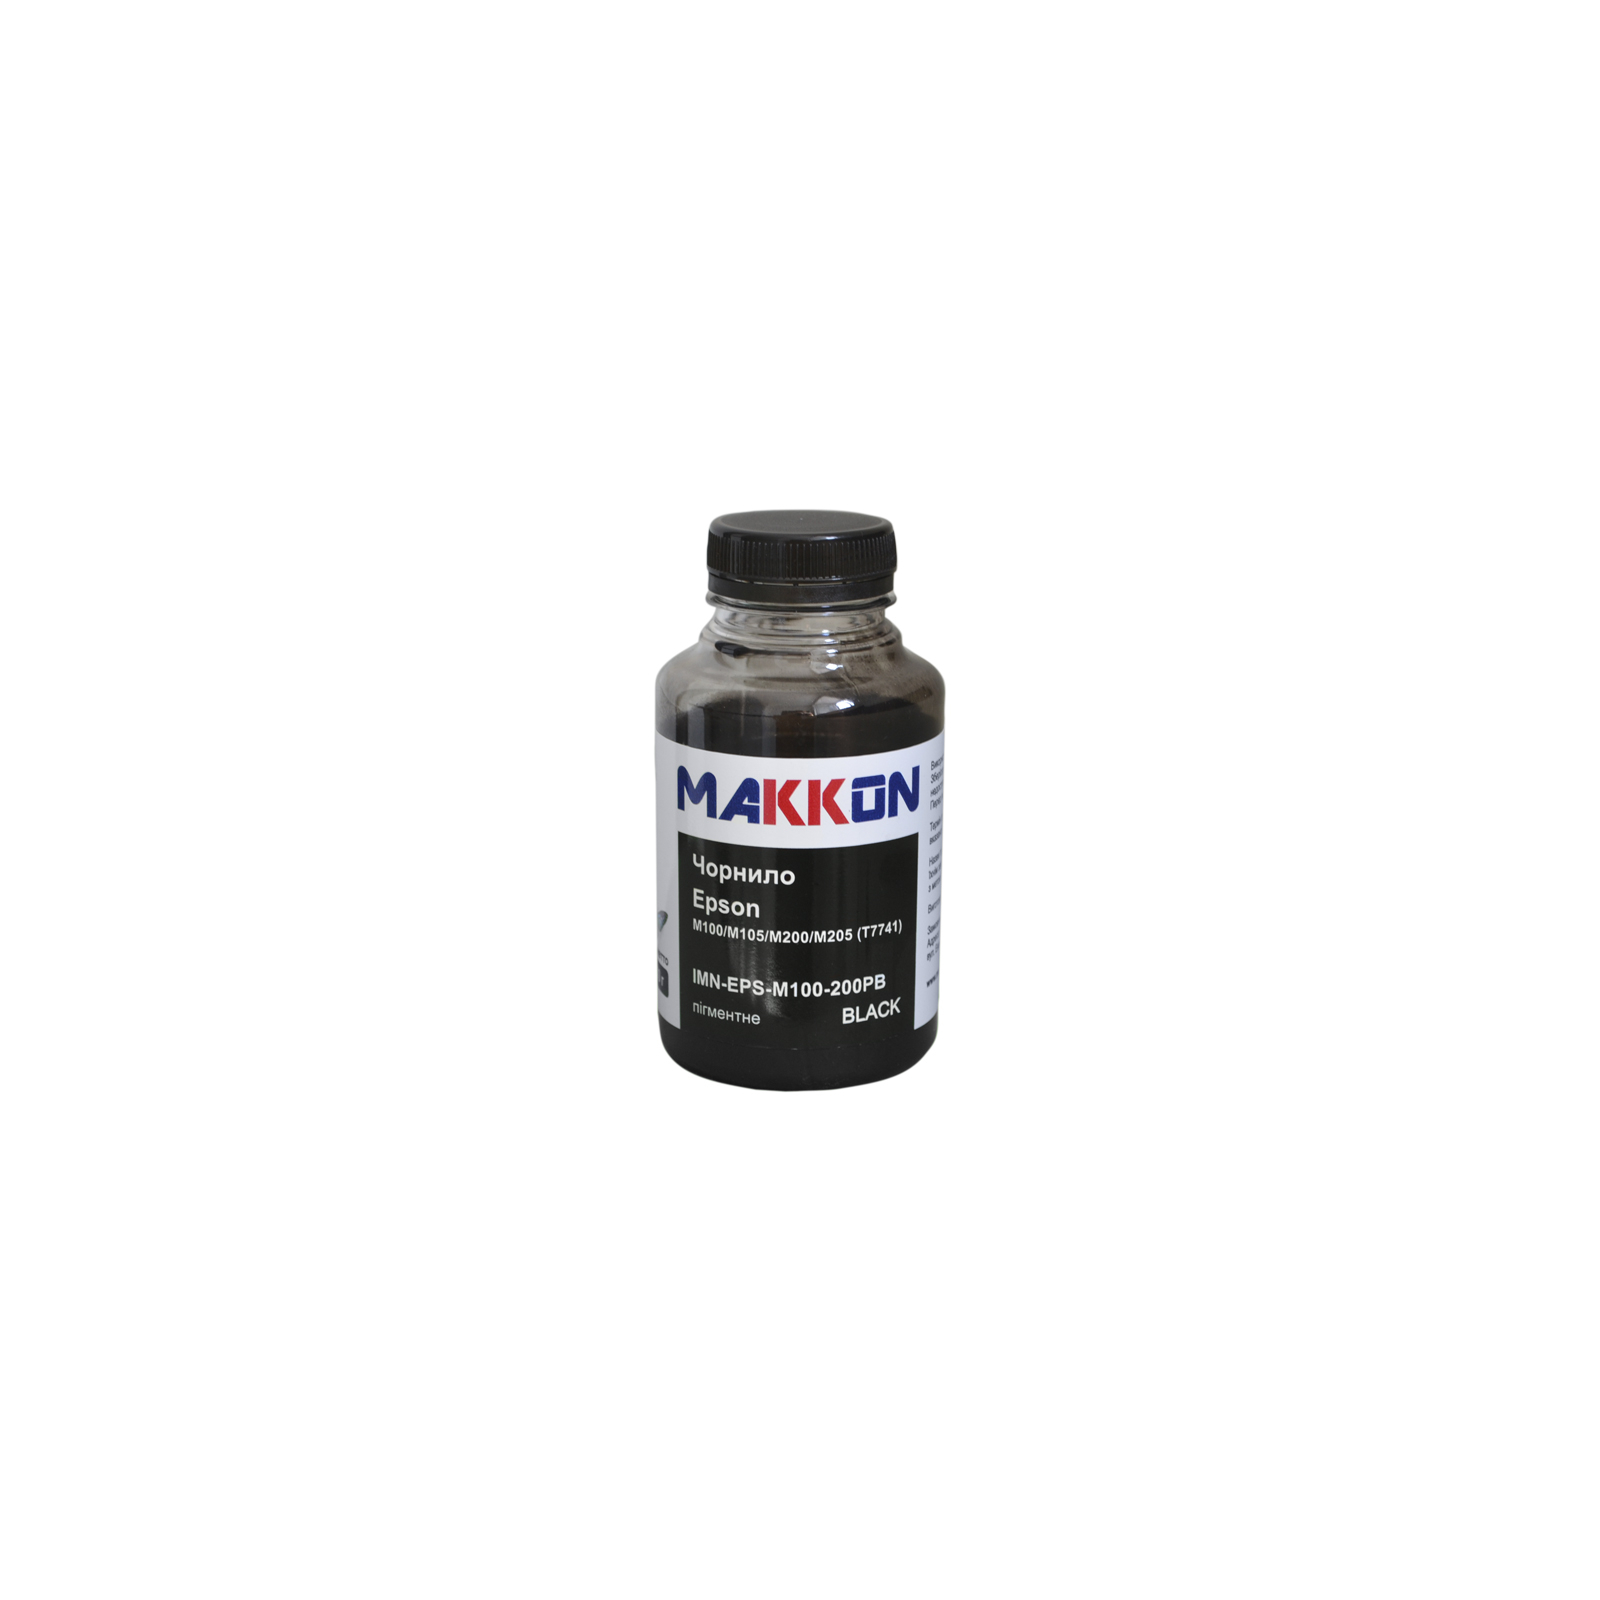 Чорнило Makkon Epson M100/M105/M200/M205 (T77414) 200г pigmented black (IMN-EPS-M100-200PB)